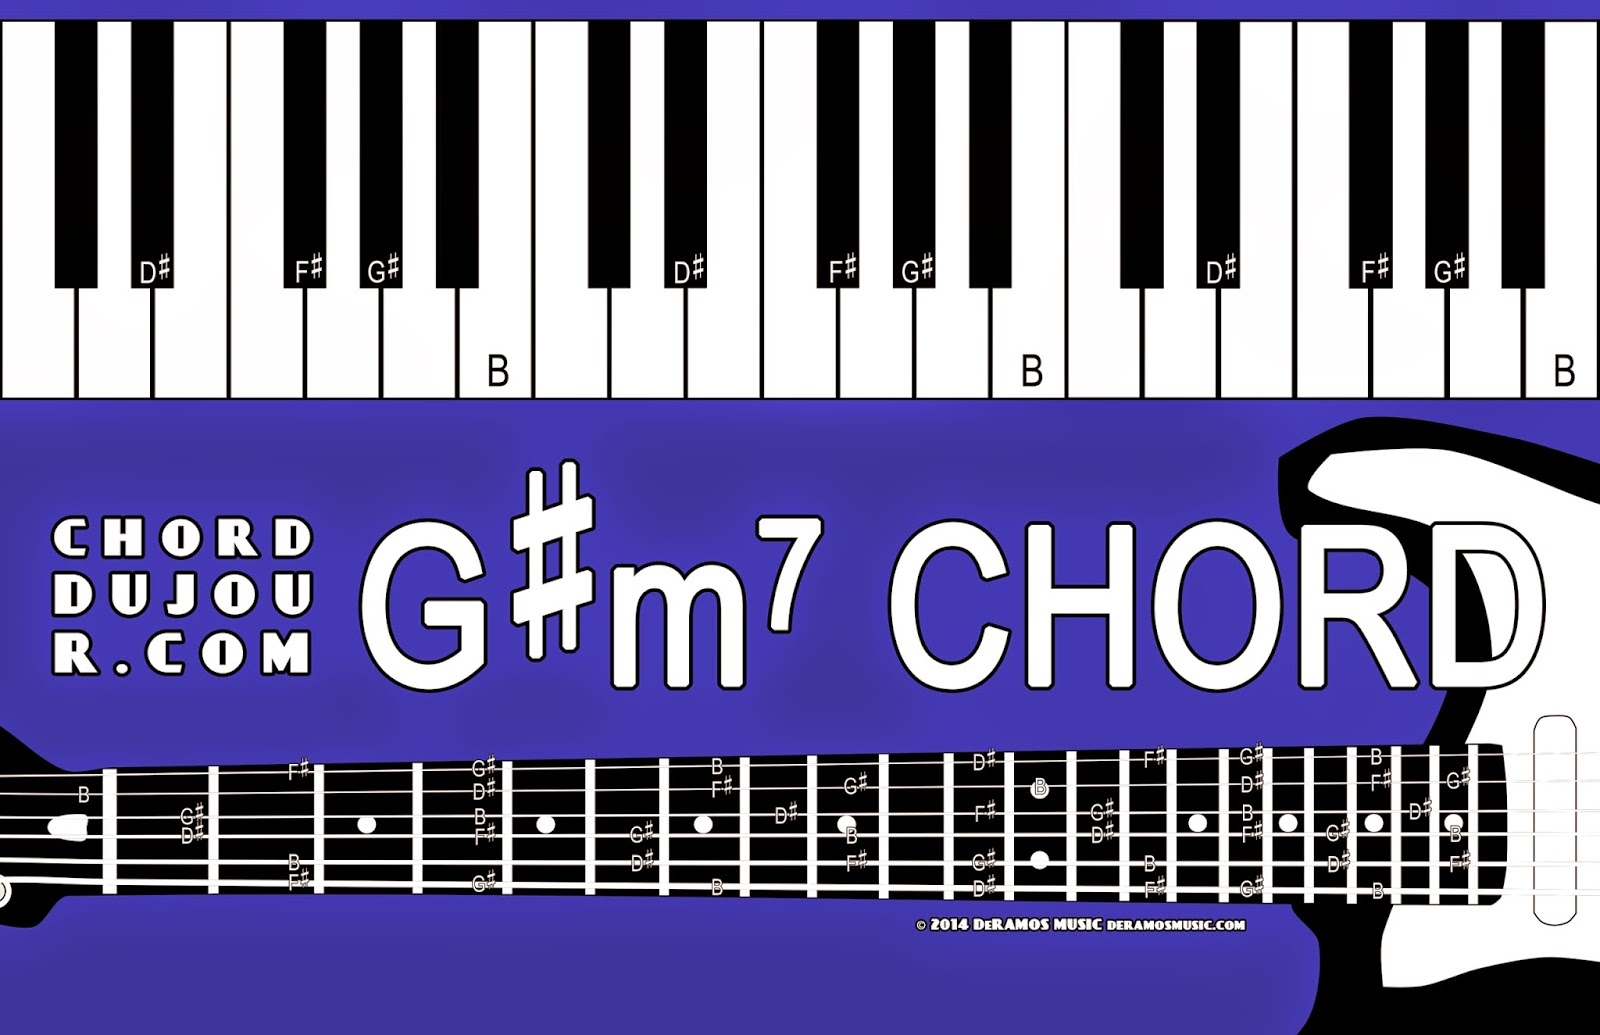 G# Piano Chord Chord Du Jour Dictionary Gm7 Chord